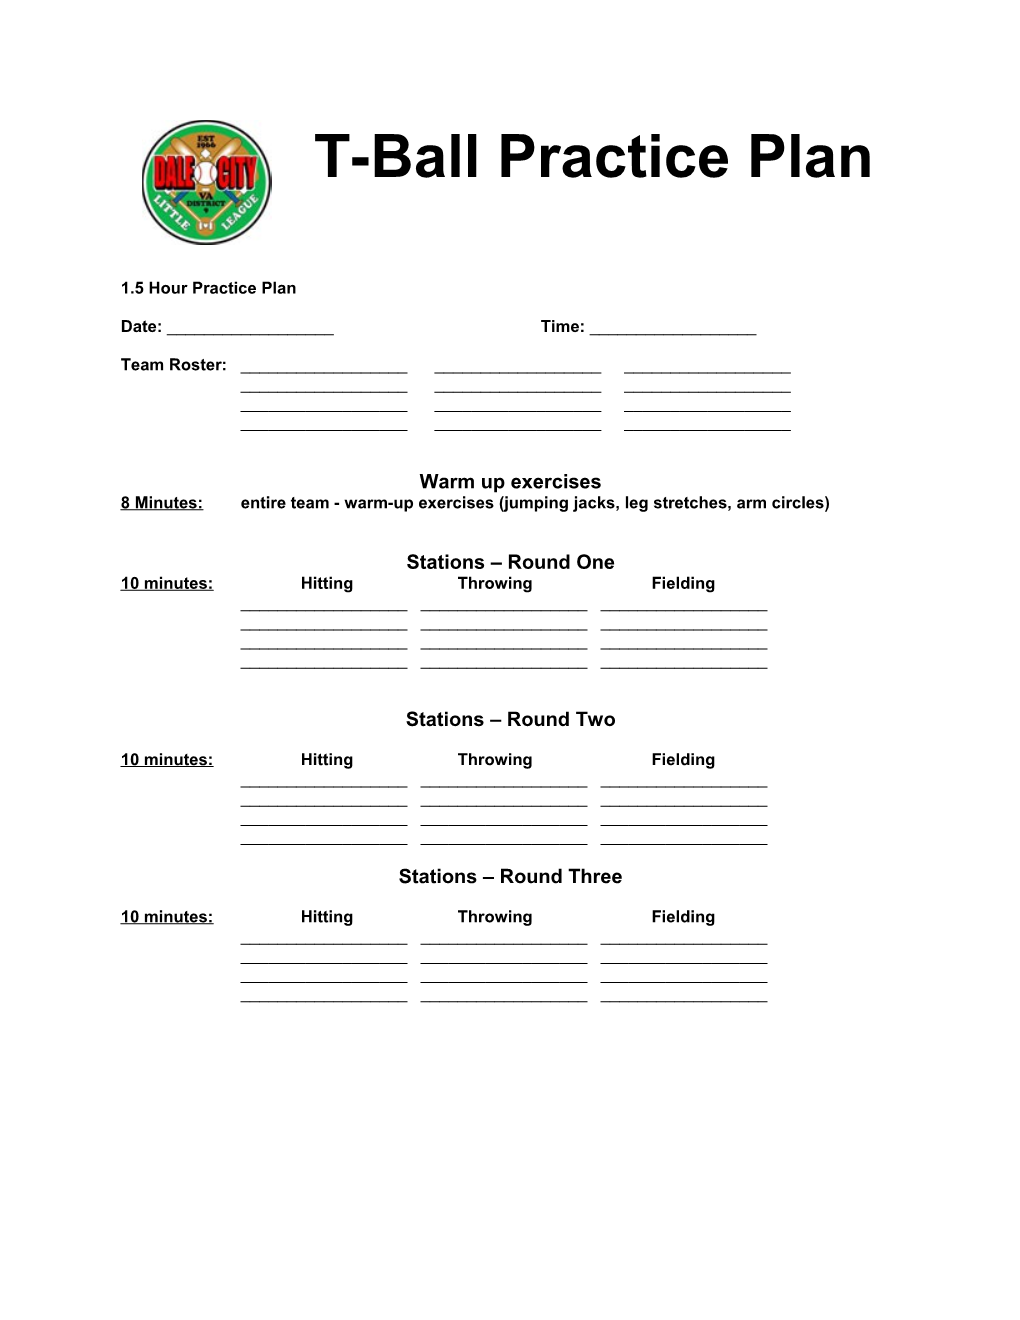 T-Ball Practice Plan